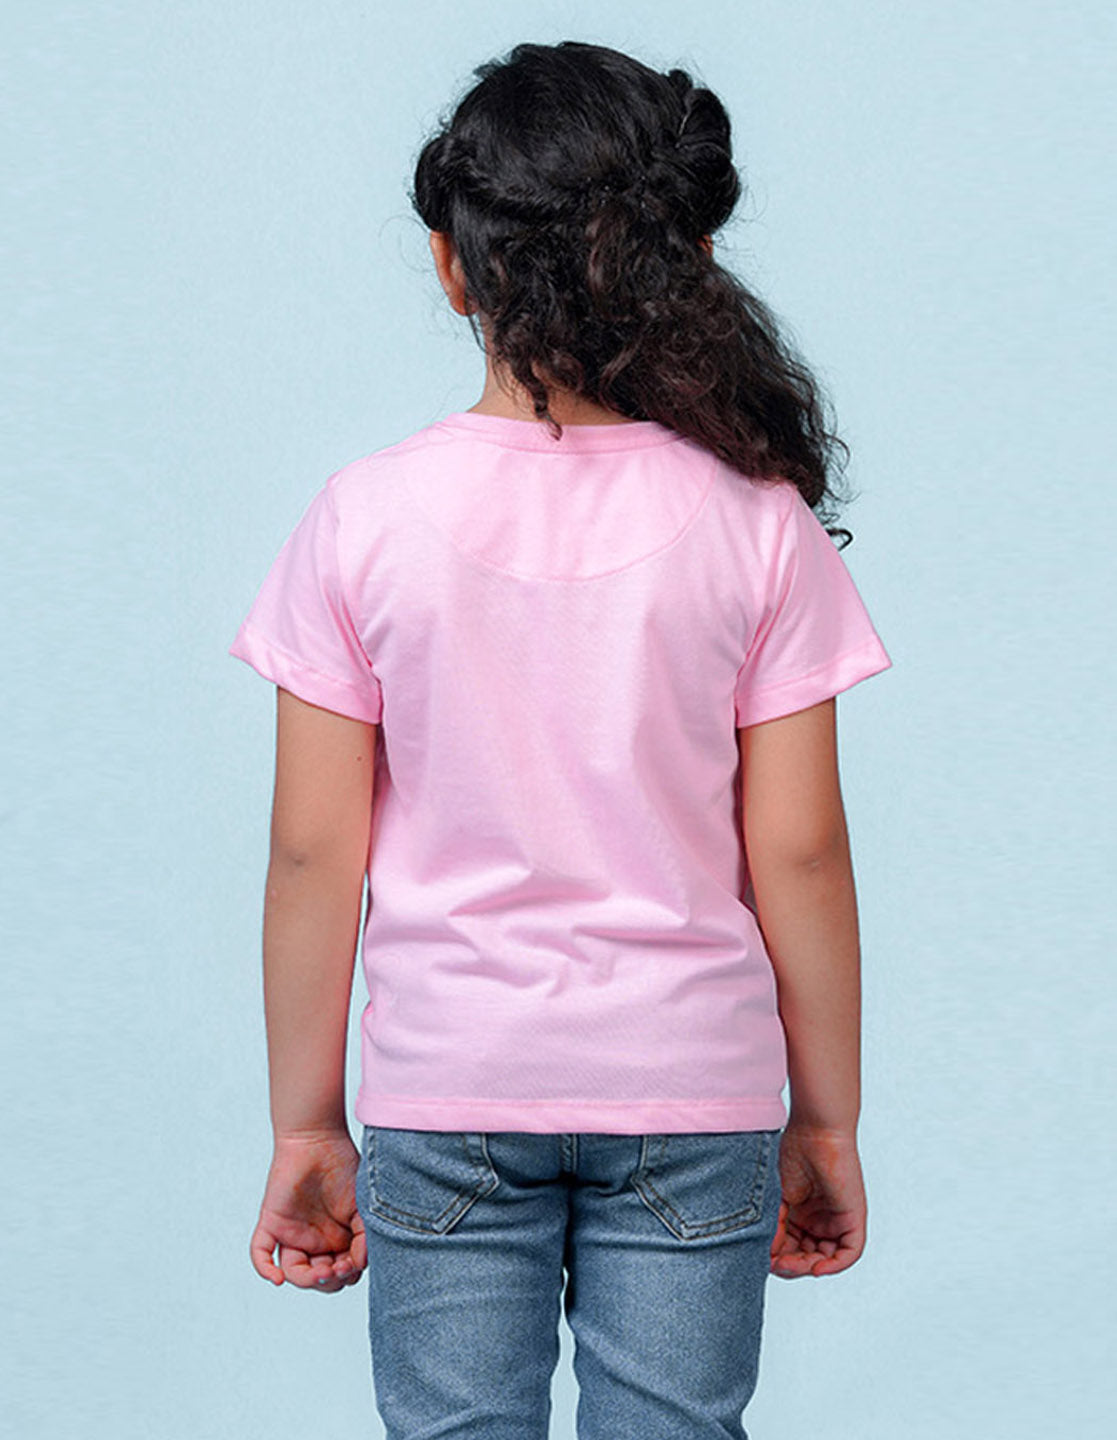 Nusyl Girls Solid Light Pink t-shirts